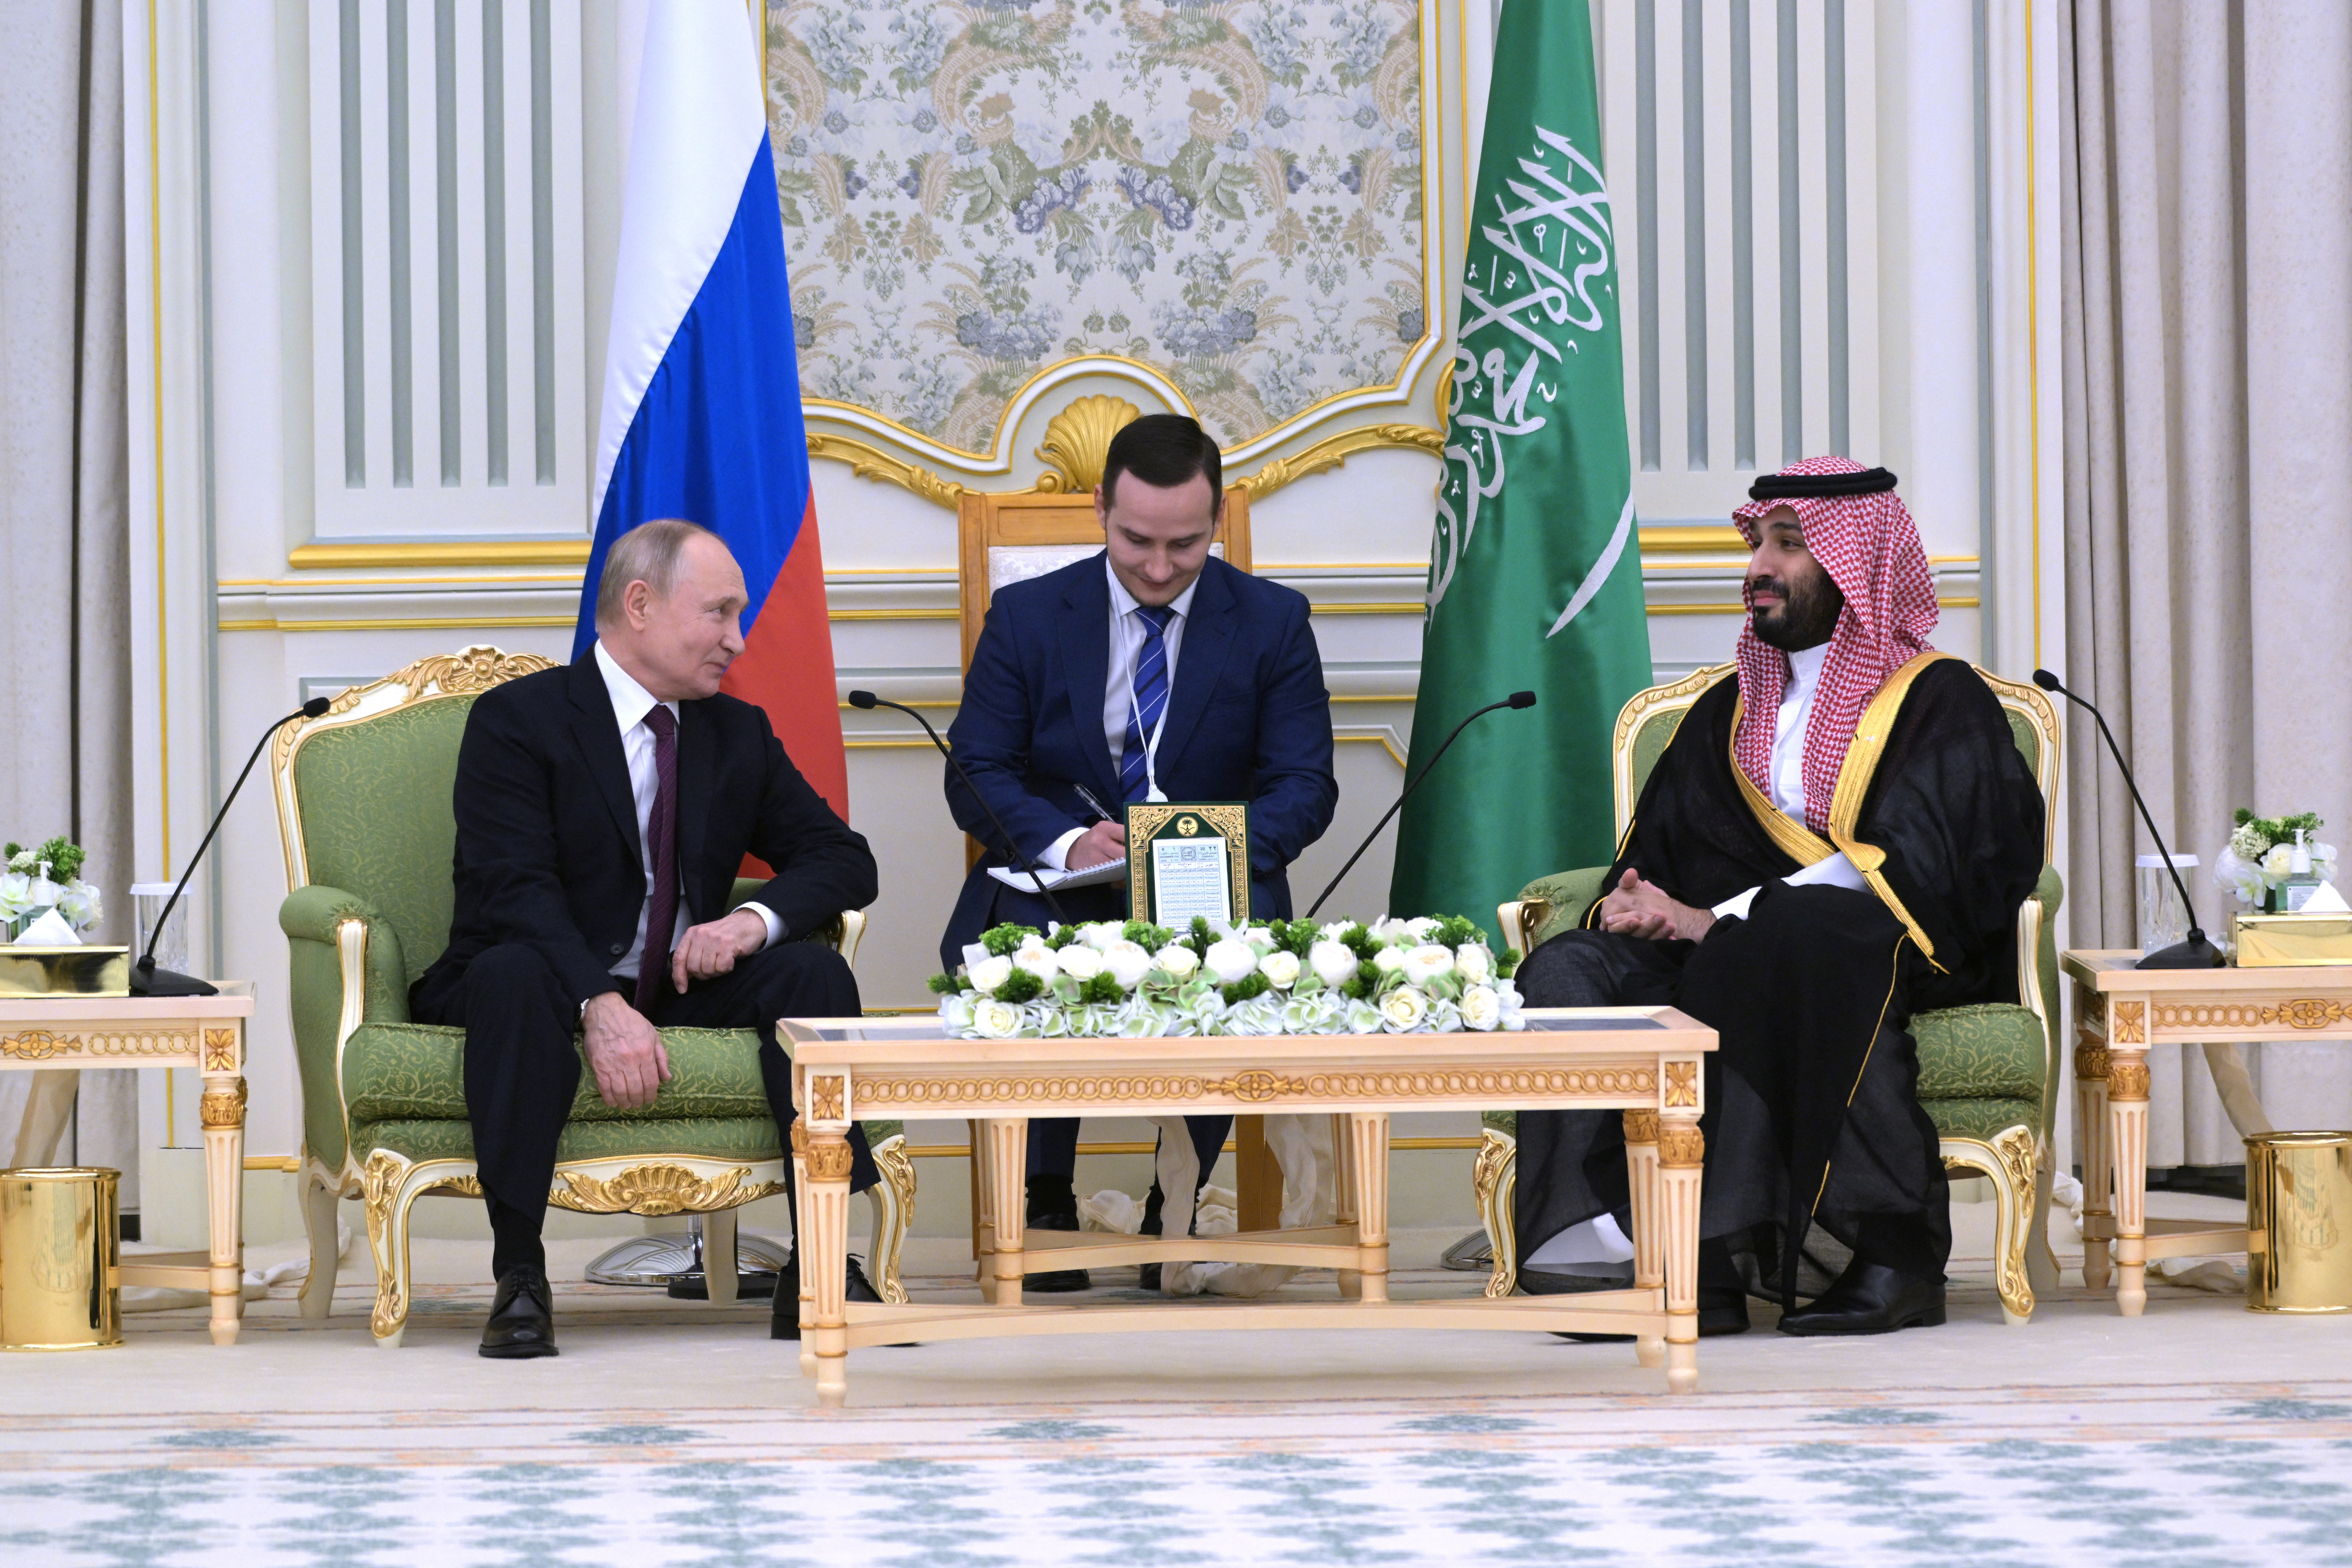 Russian President Vladimir Putin and Saudi Crown Prince Mohammed bin Salman attend a meeting in Riyadh